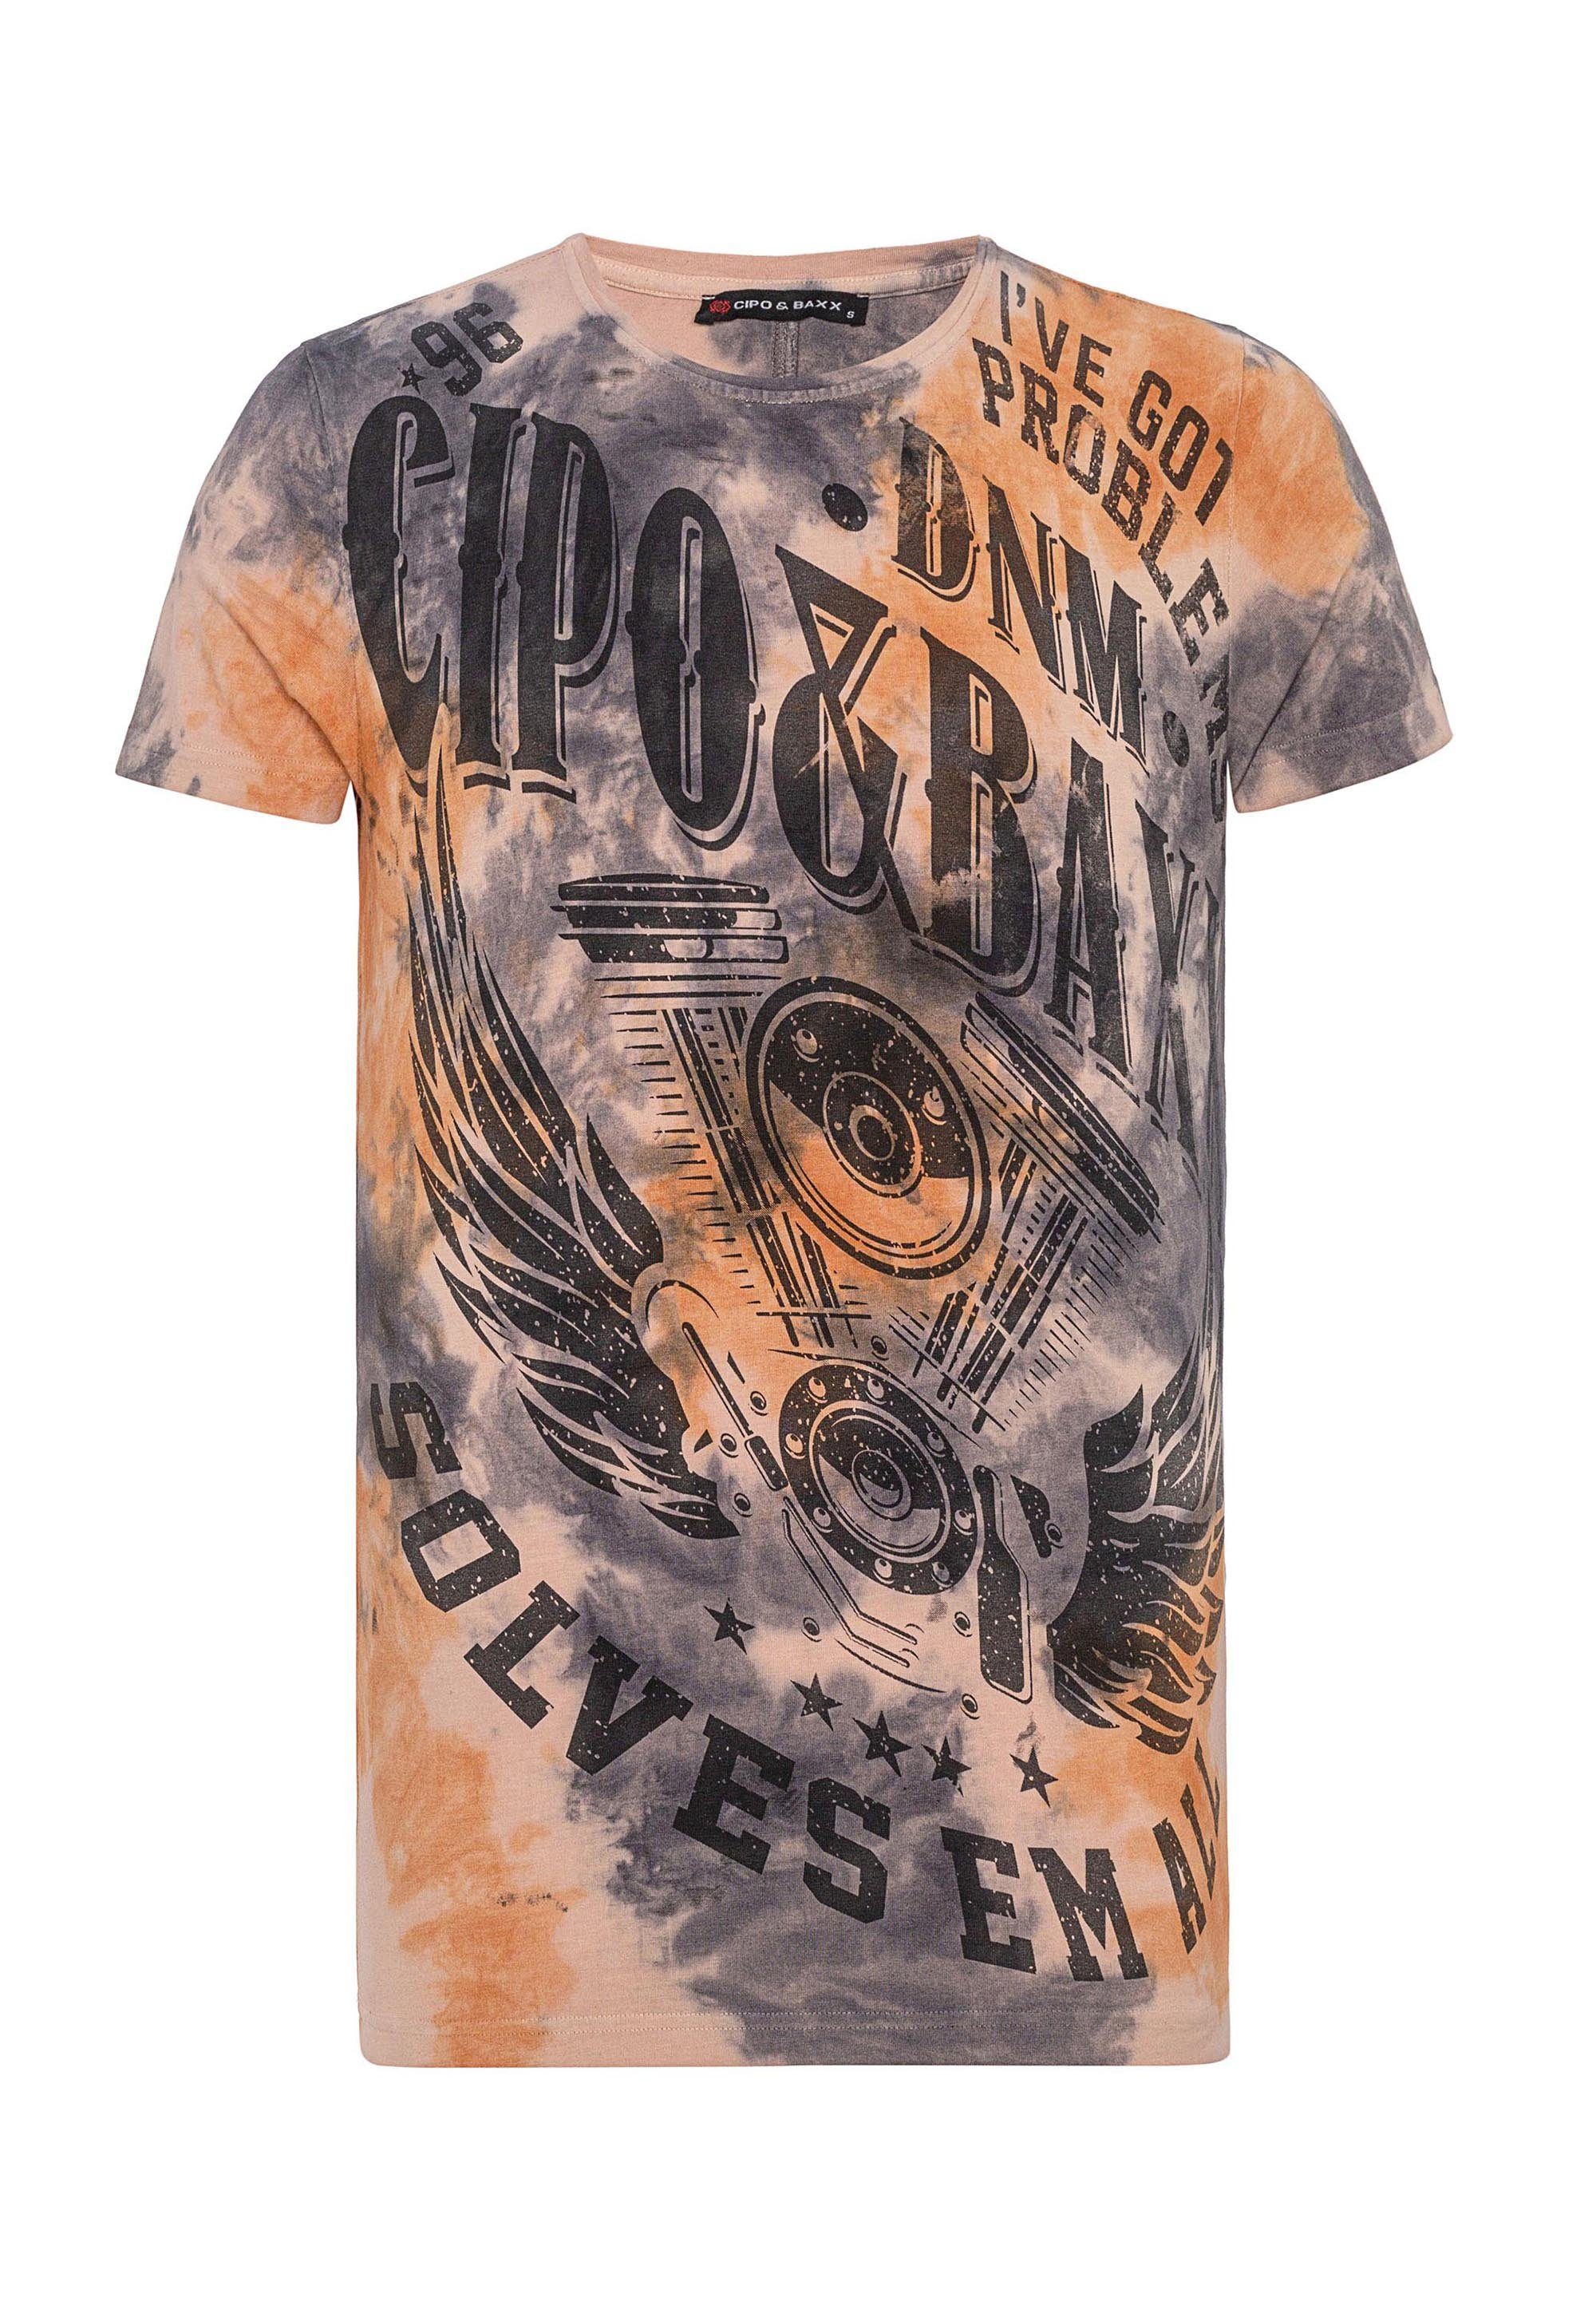 coolen Baxx Prints & mit Cipo T-Shirt orange